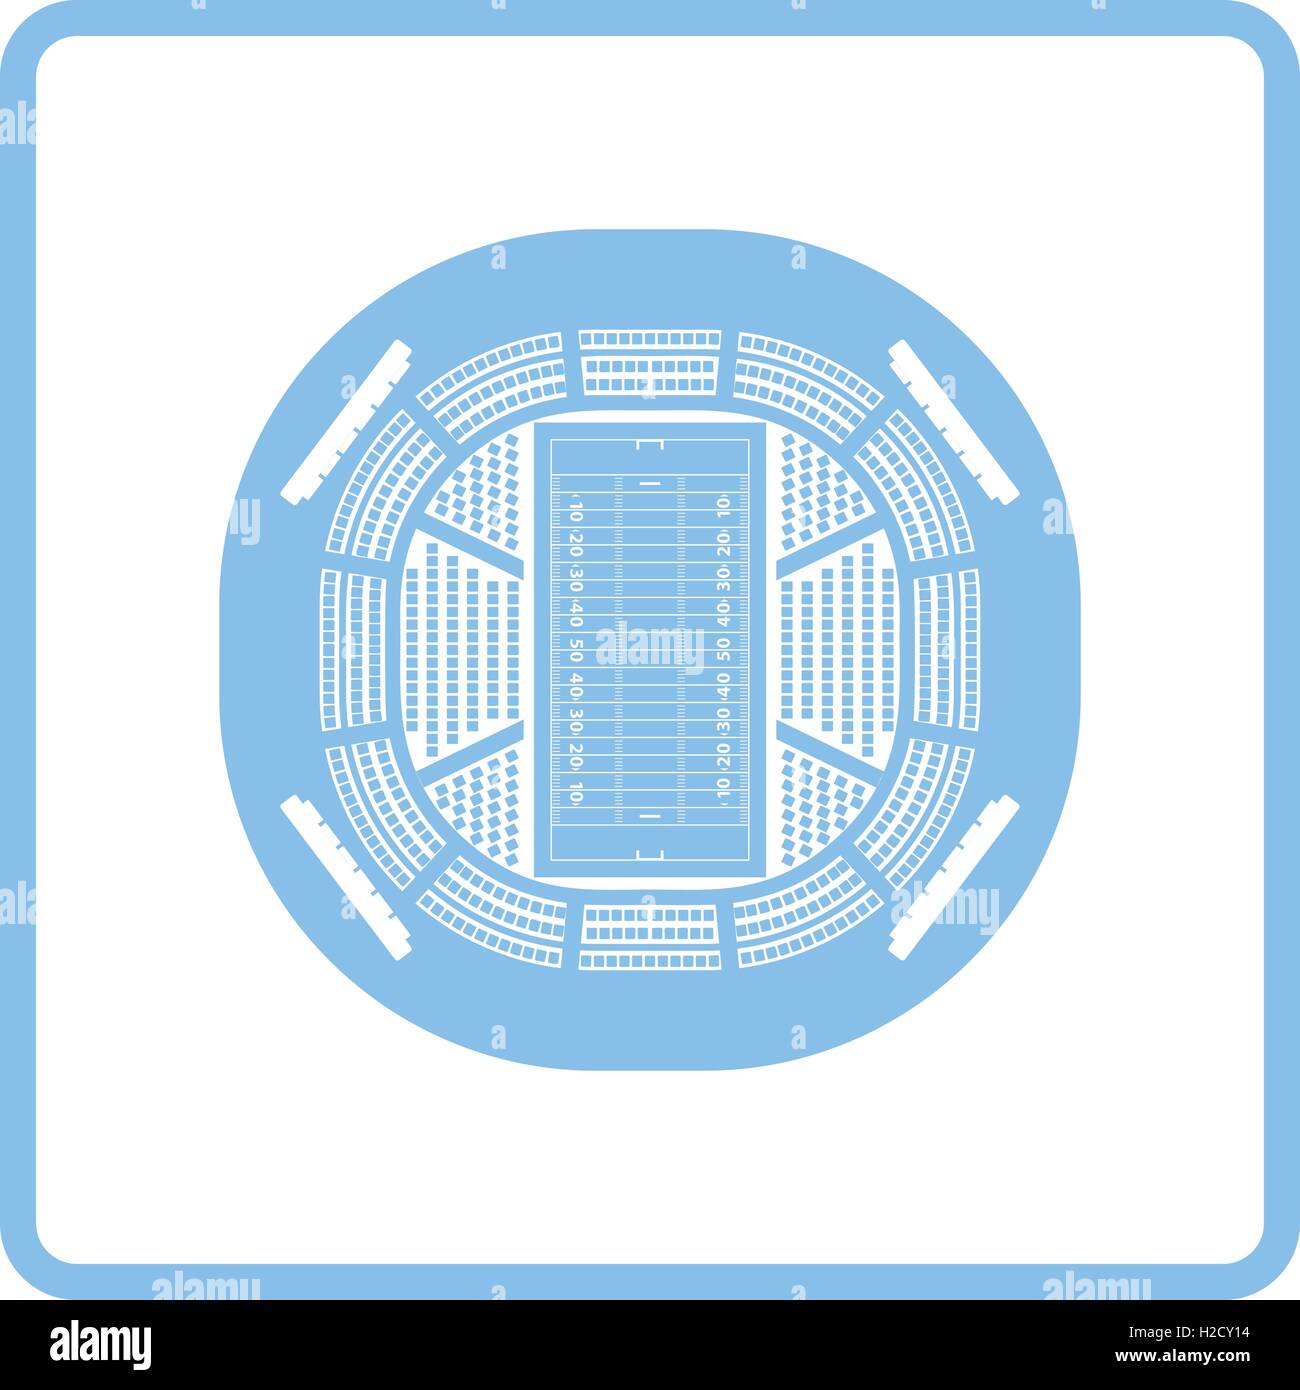 American football stadium bird's-eye view icon. Blue frame design. Vector illustration. Stock Vector